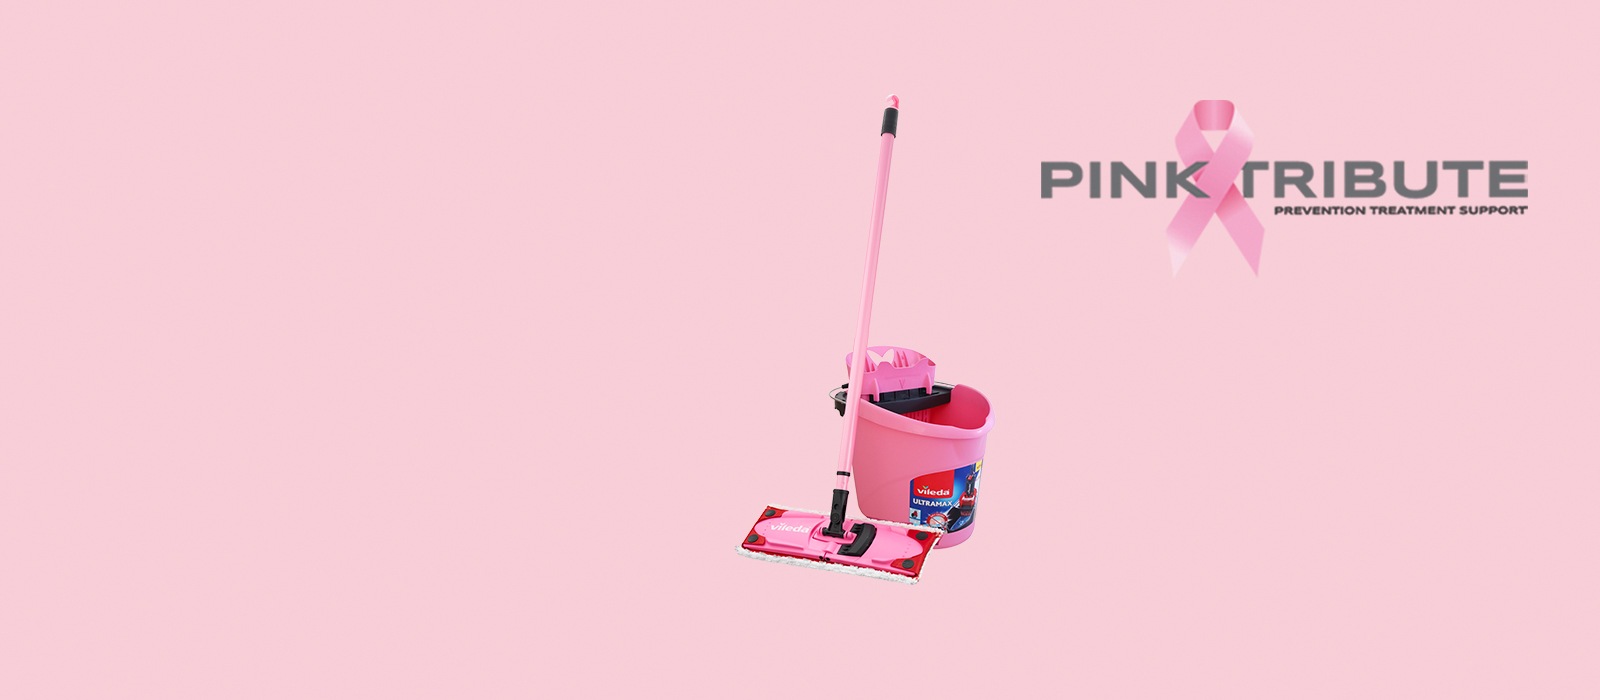 Pink_banner_2022.jpg